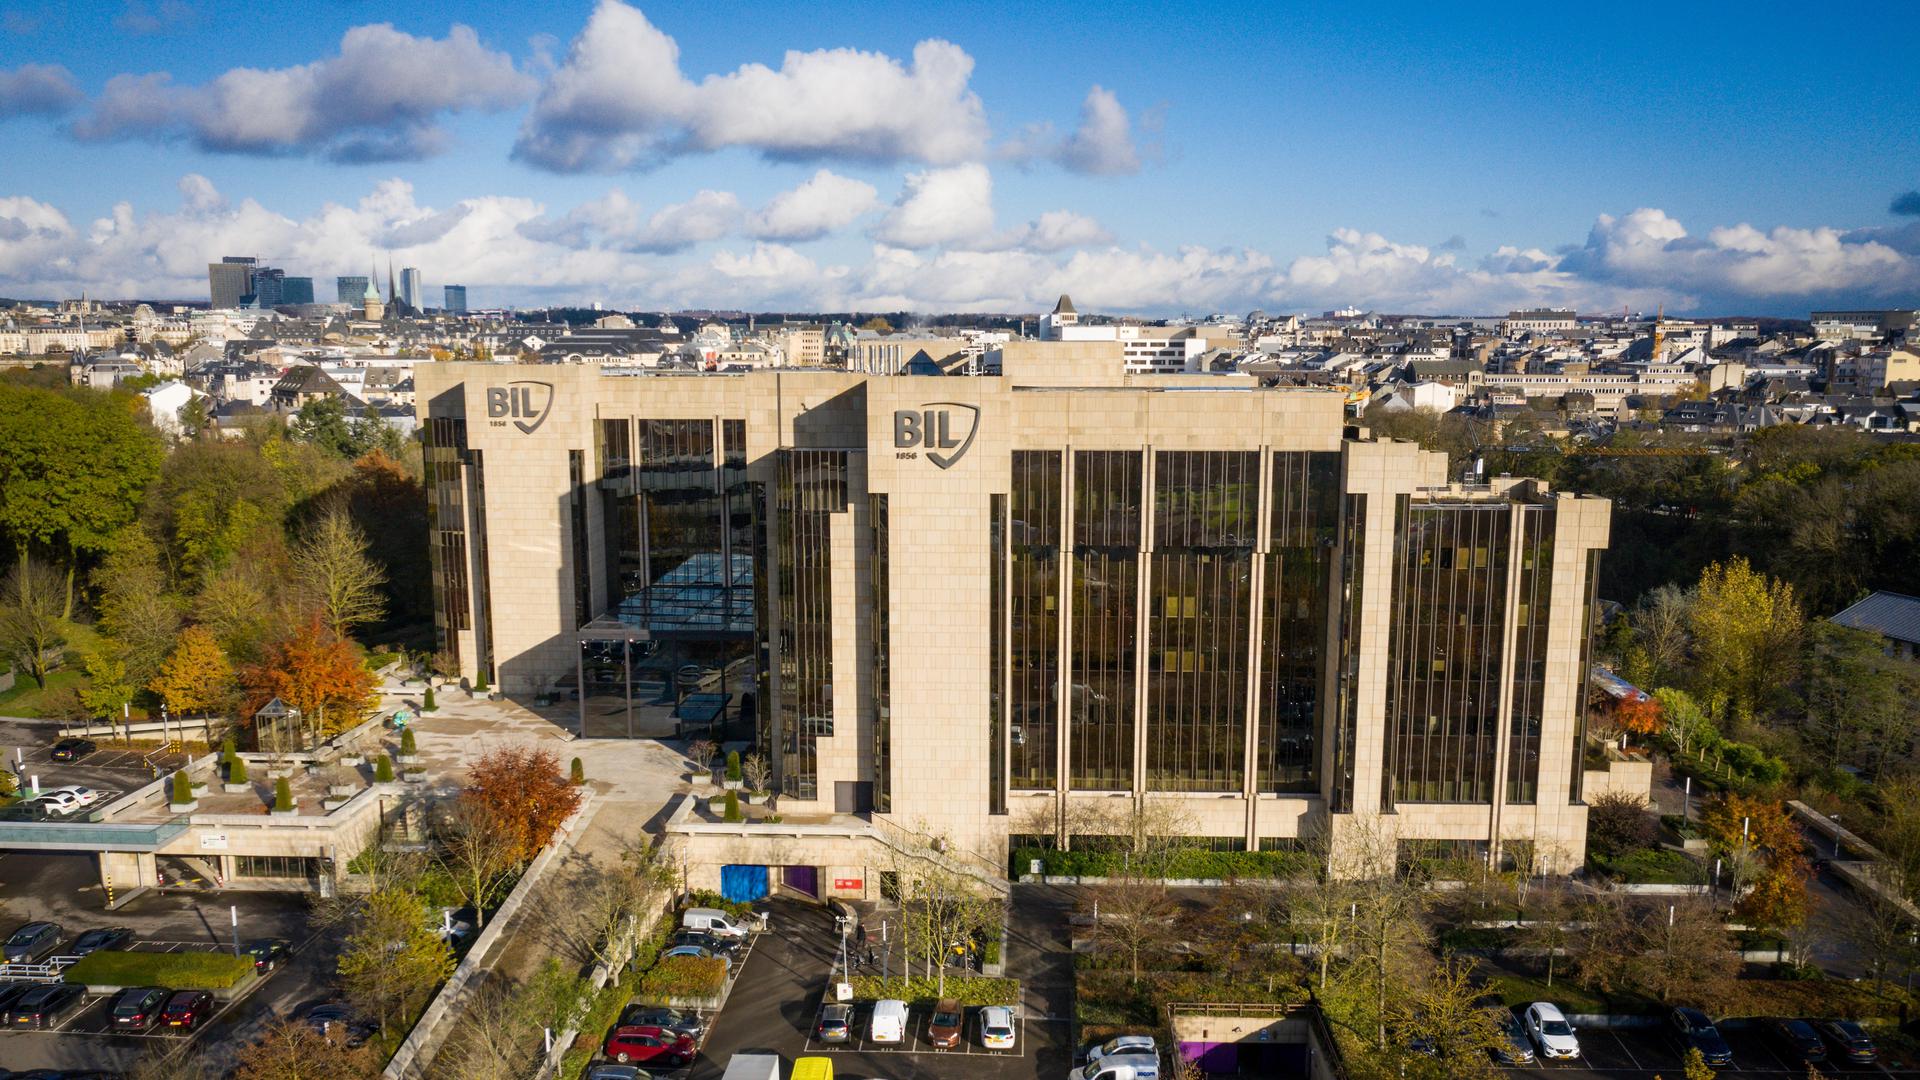 Banque Internationale à Luxembourg (BIL)